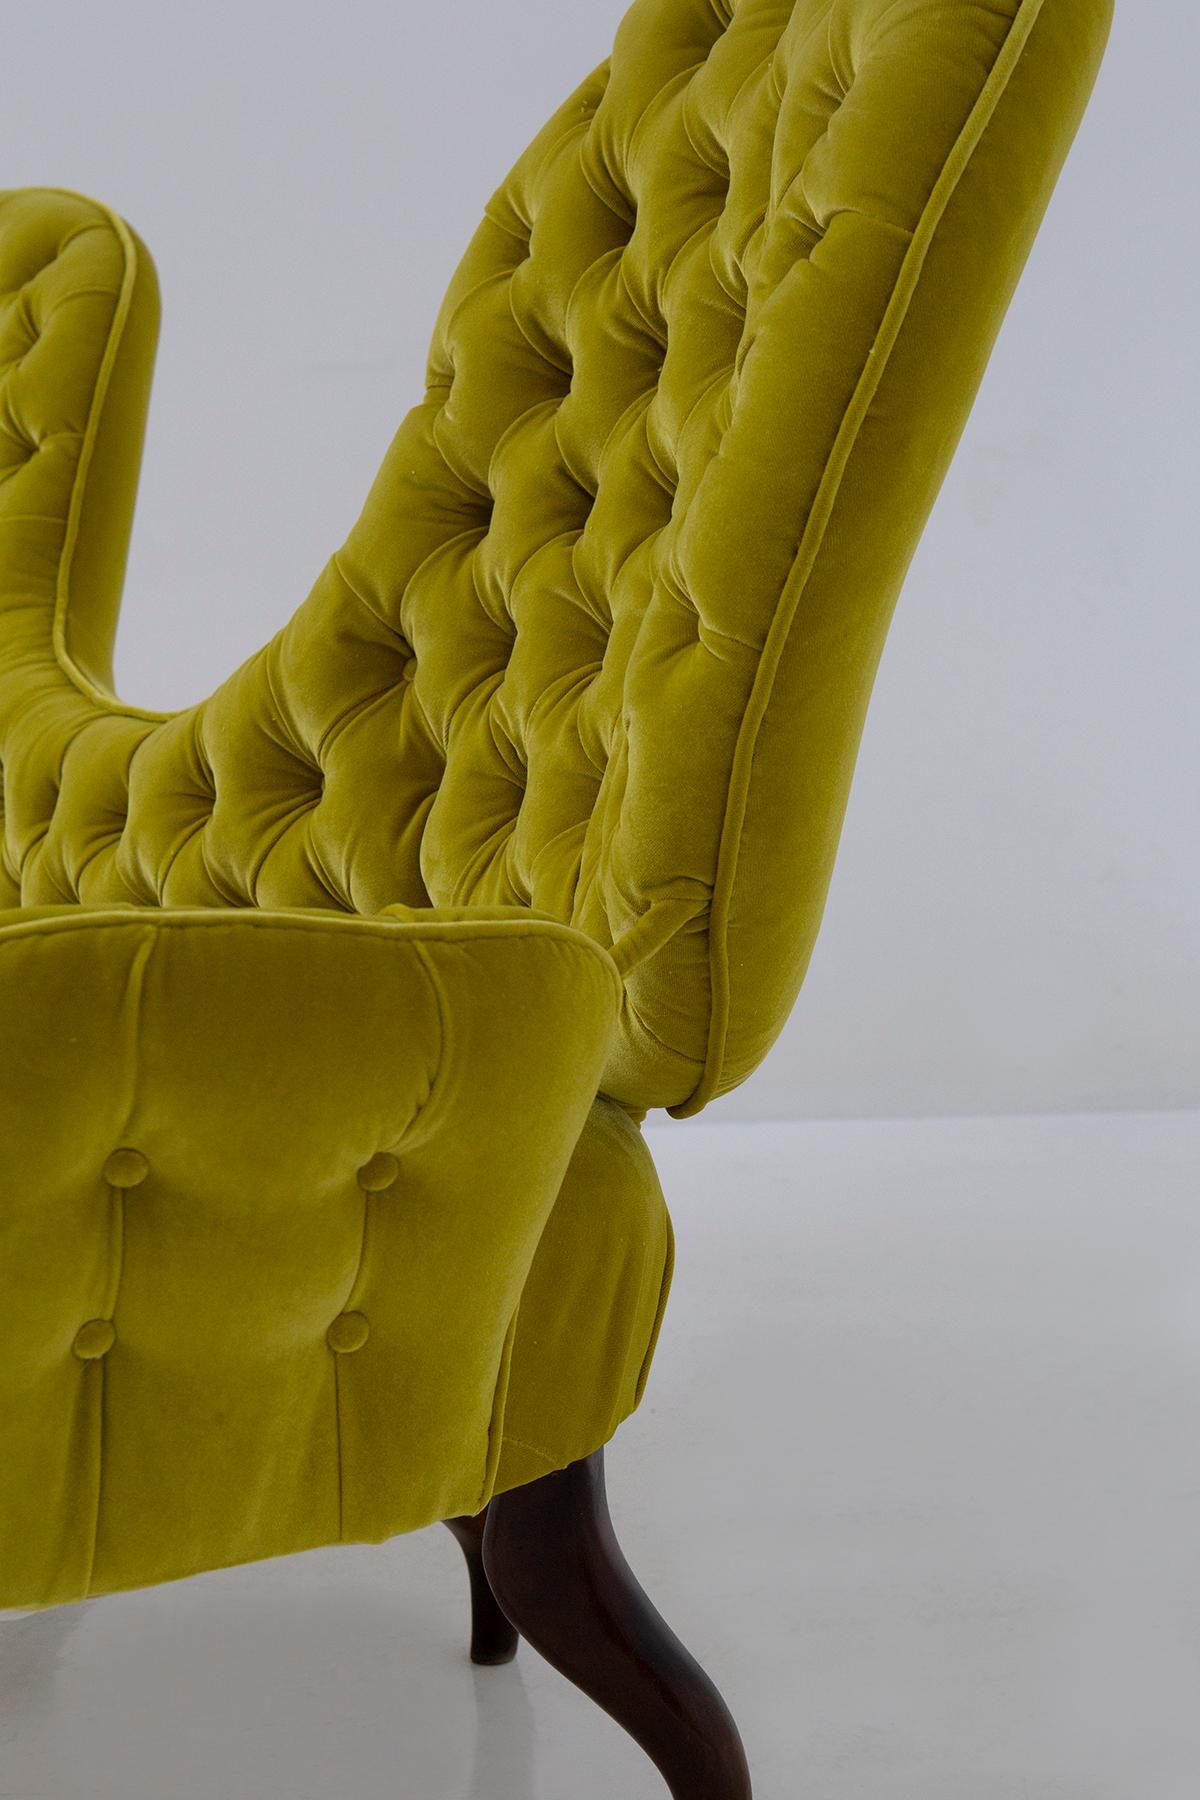 Italian Loveseat sofa by Renzo Zavanella in yellow velvet For Sale 9